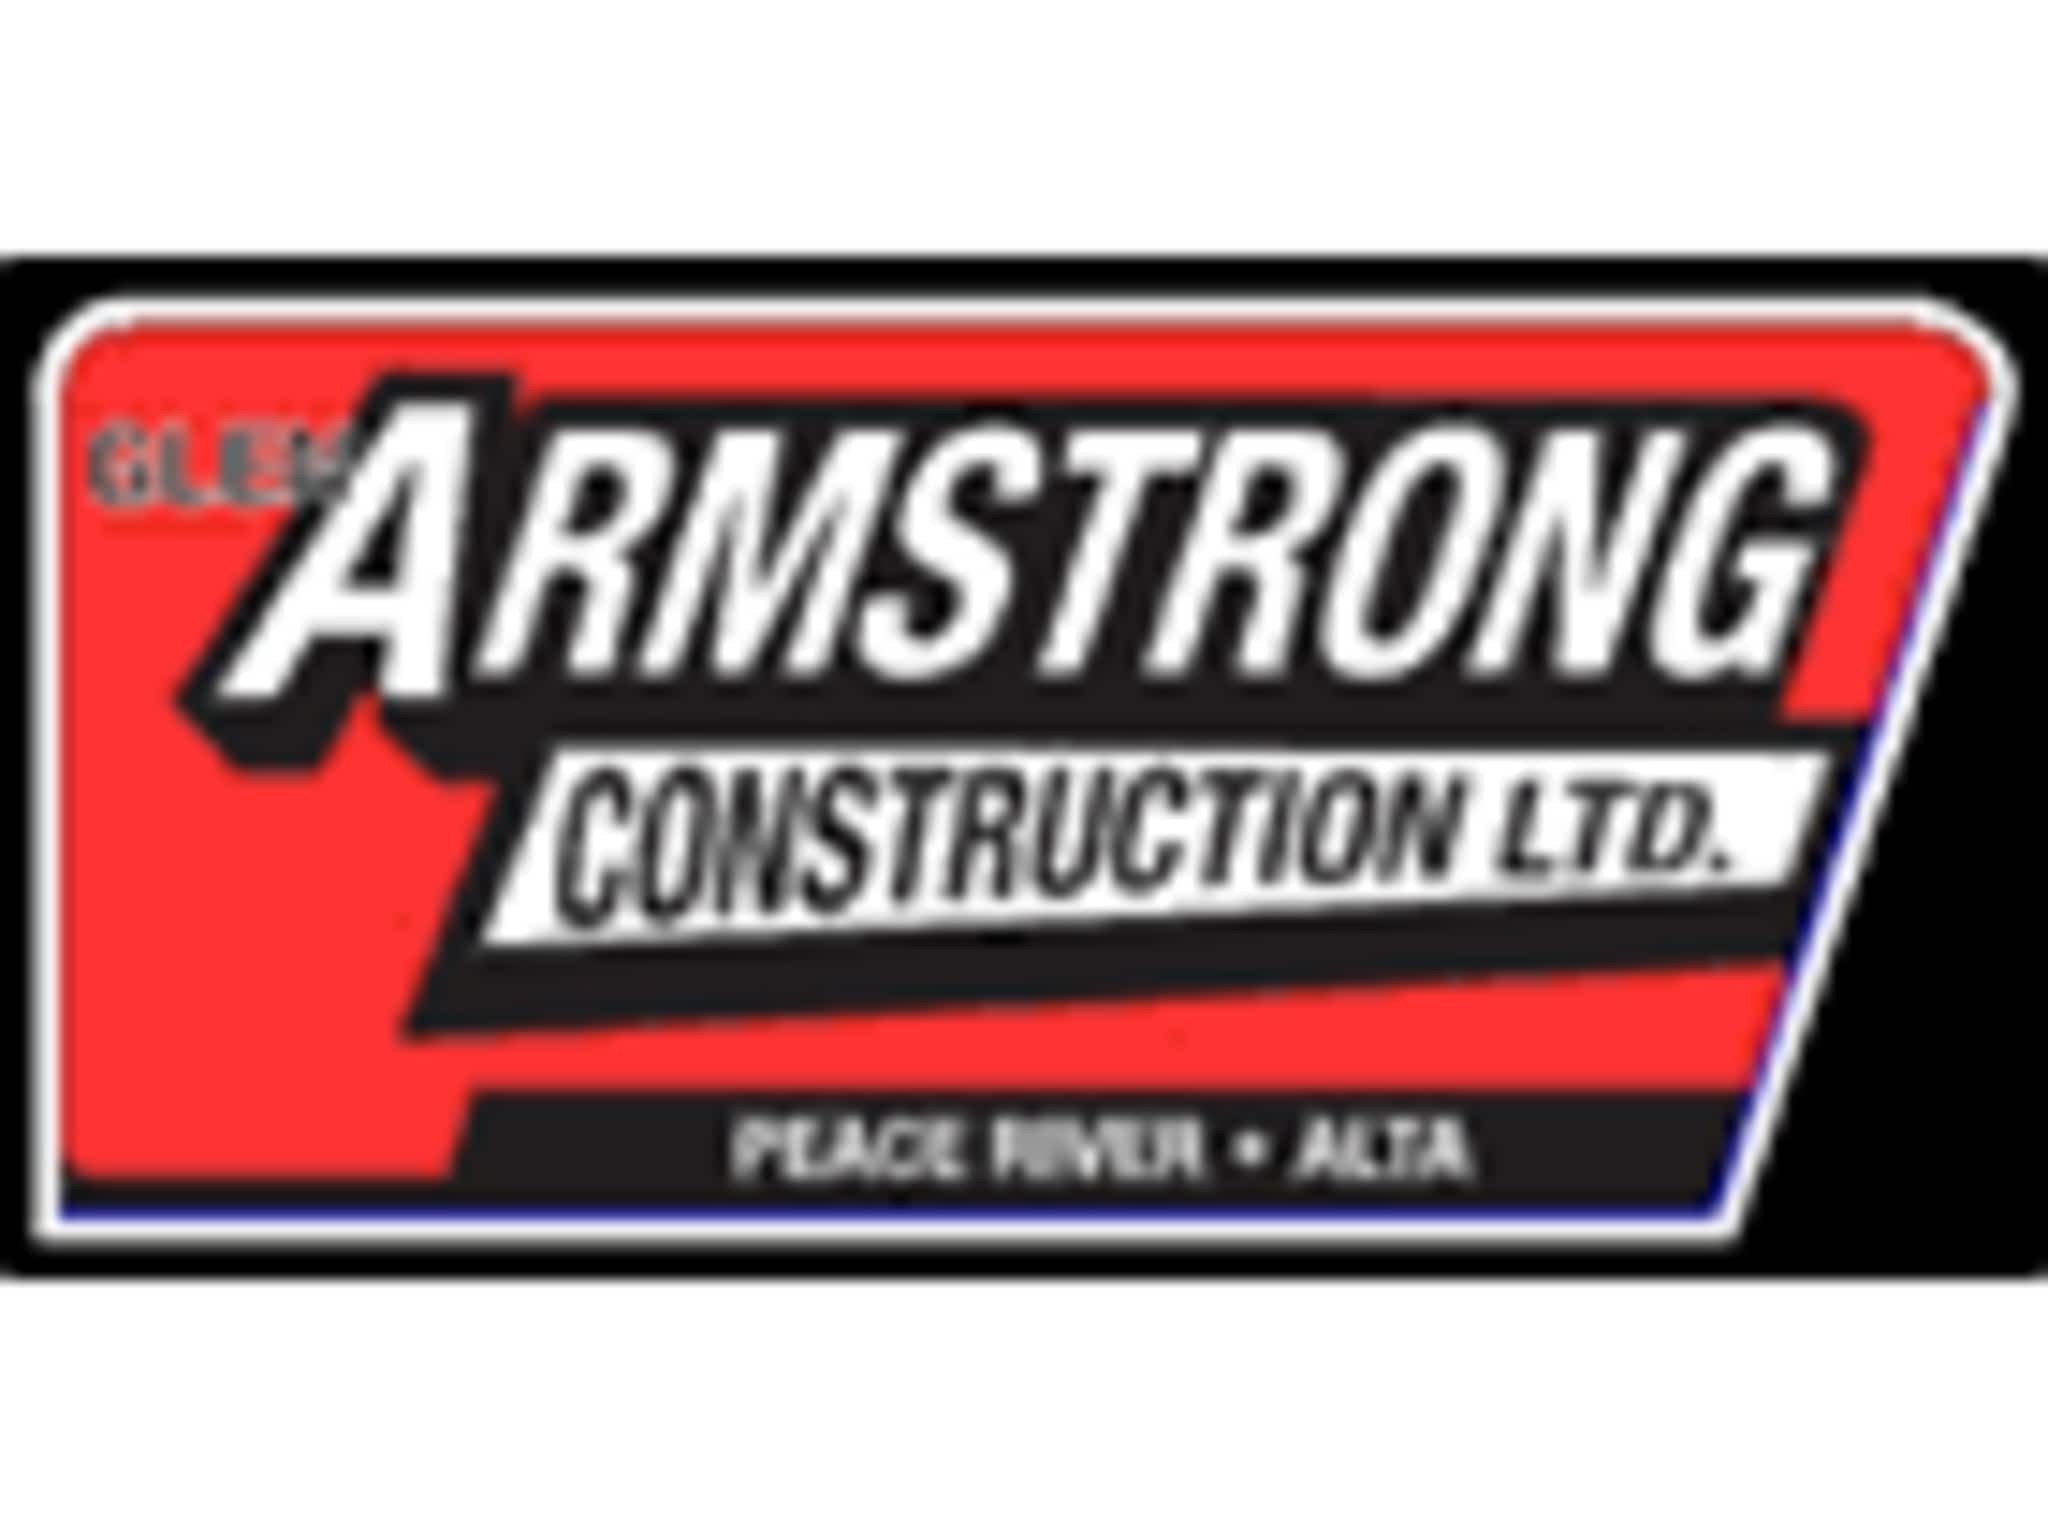 photo Glen Armstrong Construction Ltd